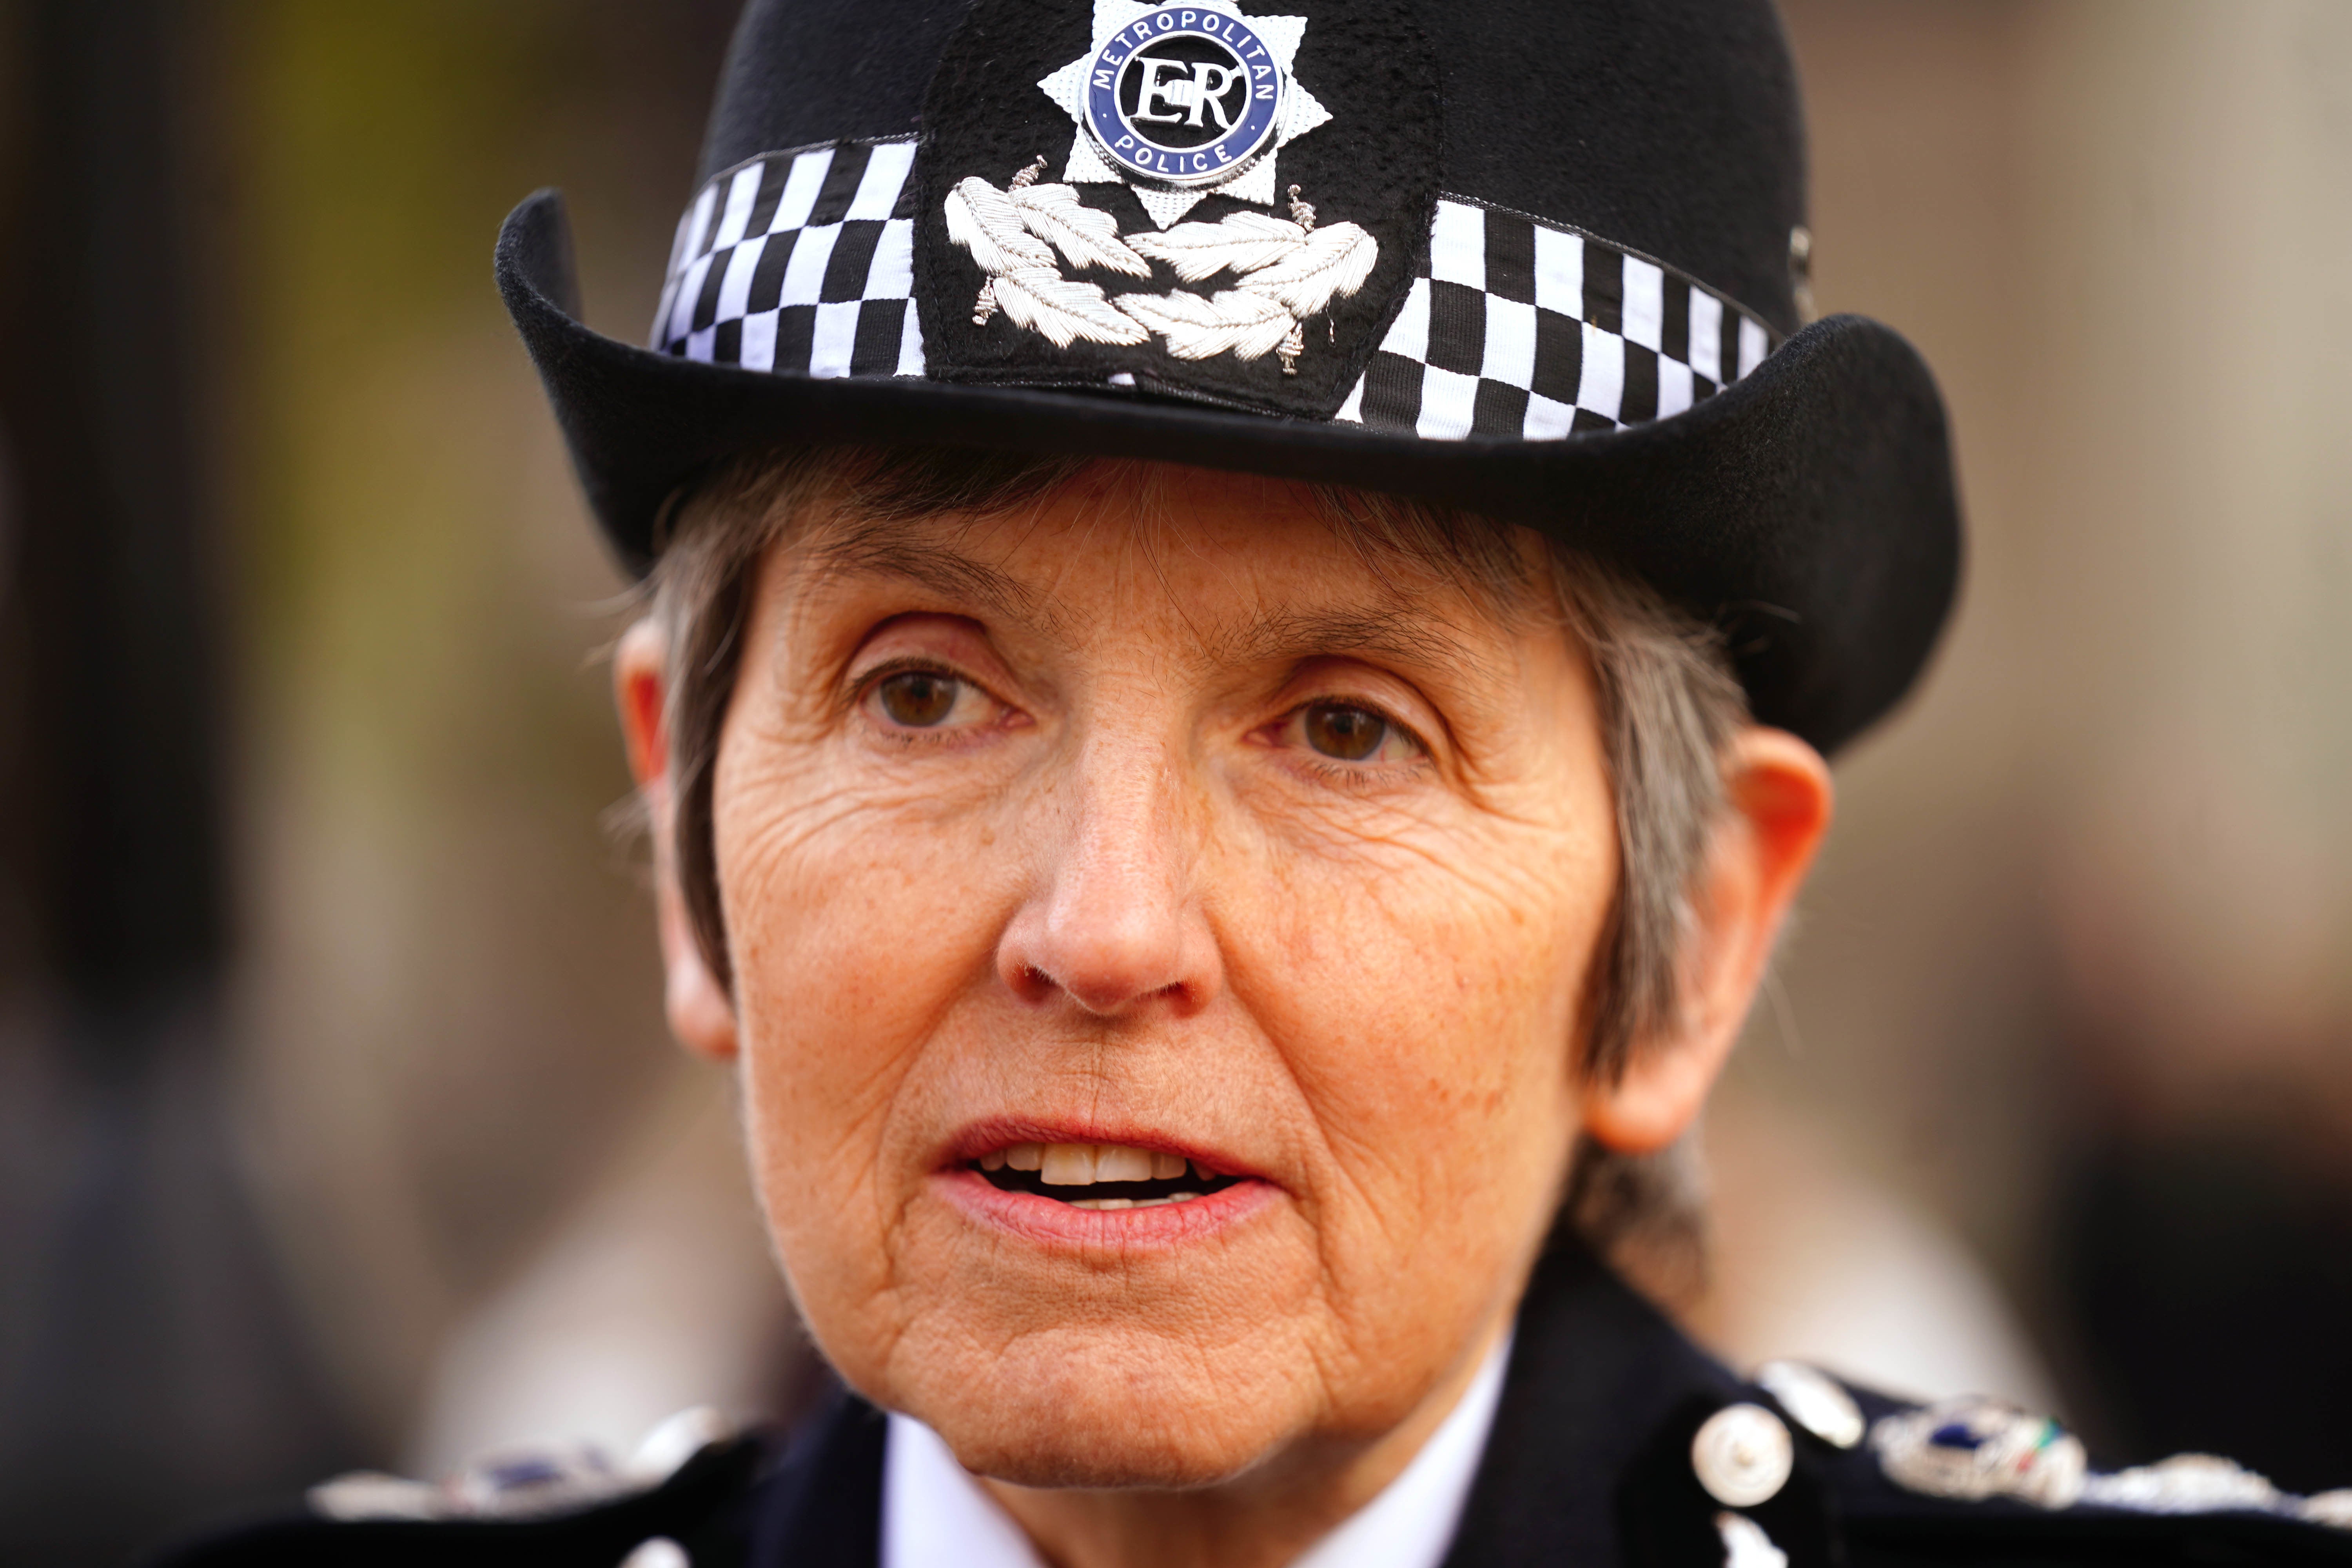 Dame Cressida quit as Metropolitan Police Commissioner last month